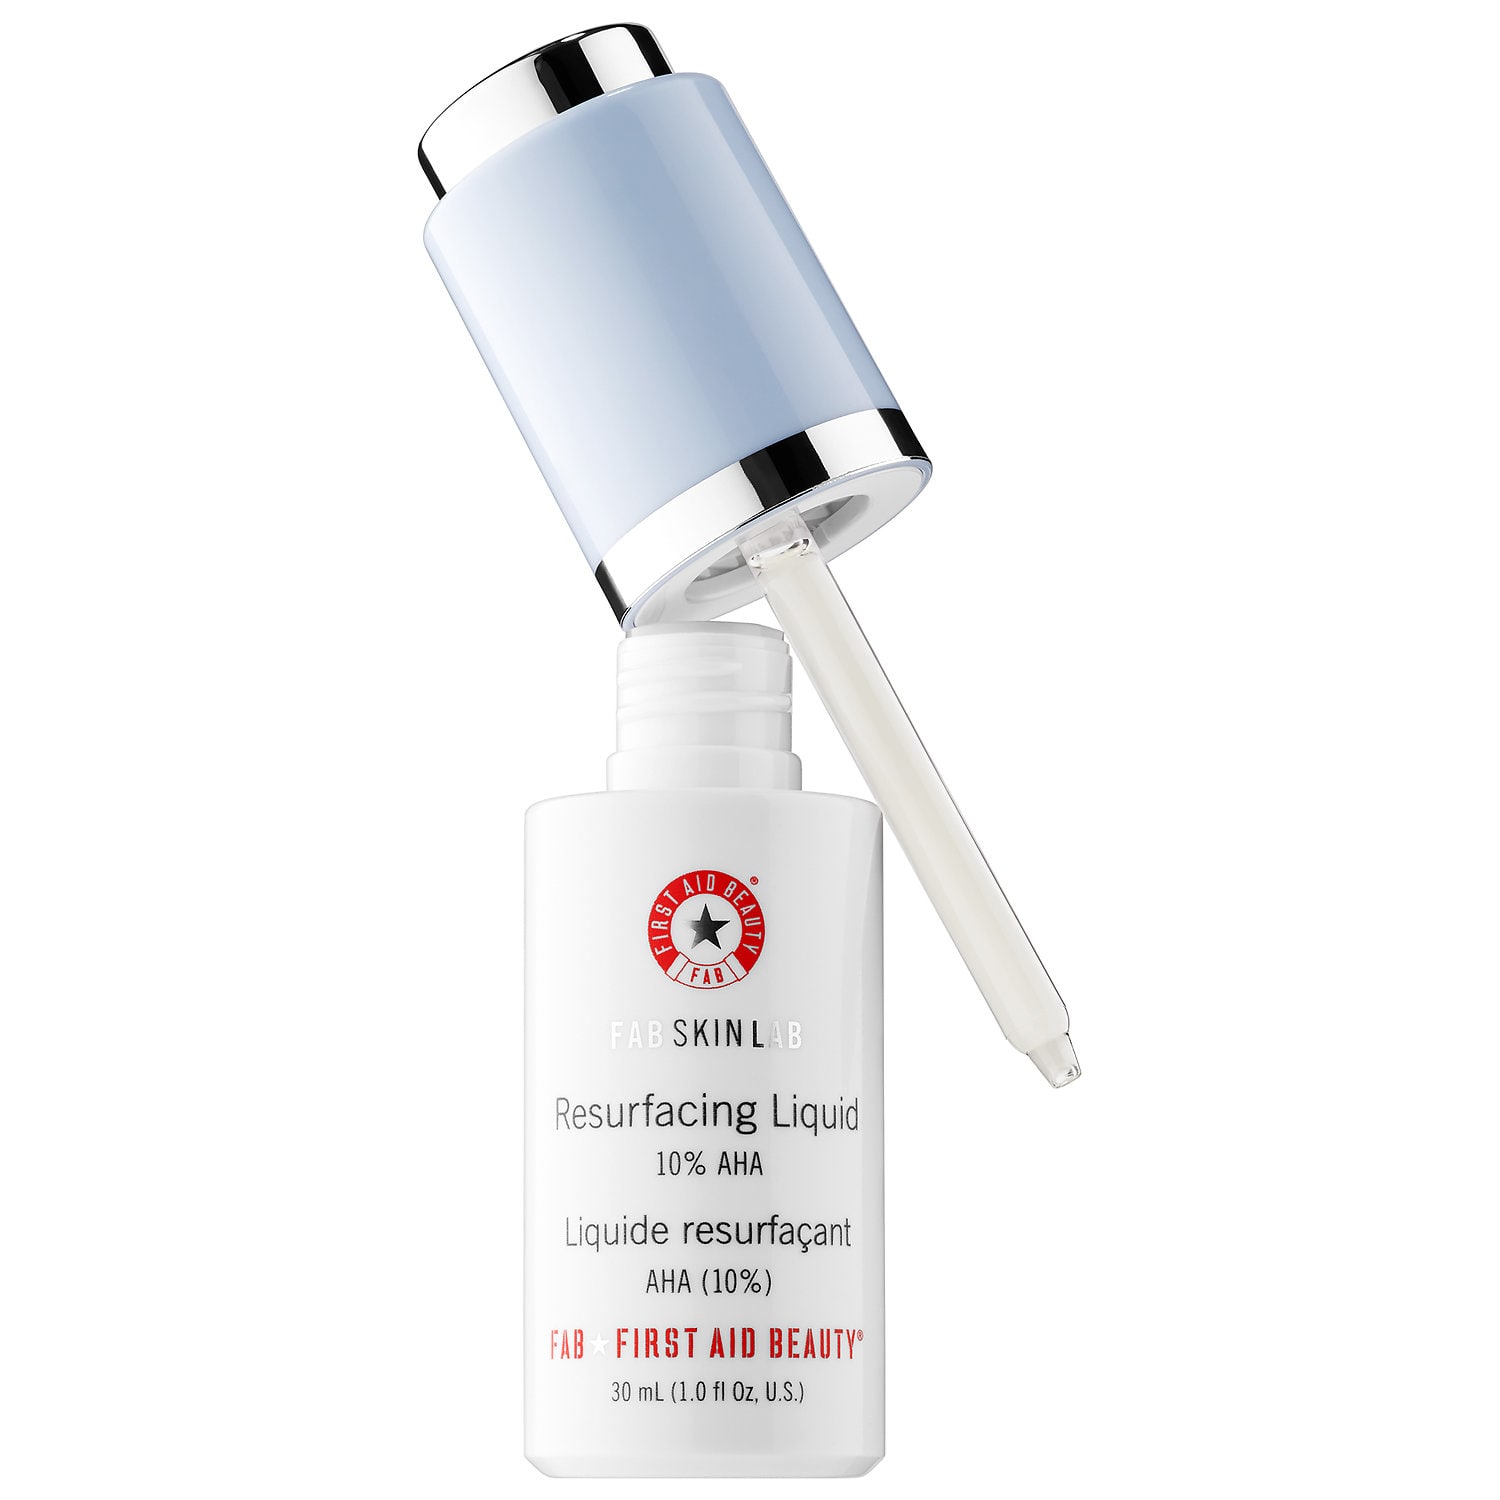 First aid beauty resurfacing liquid